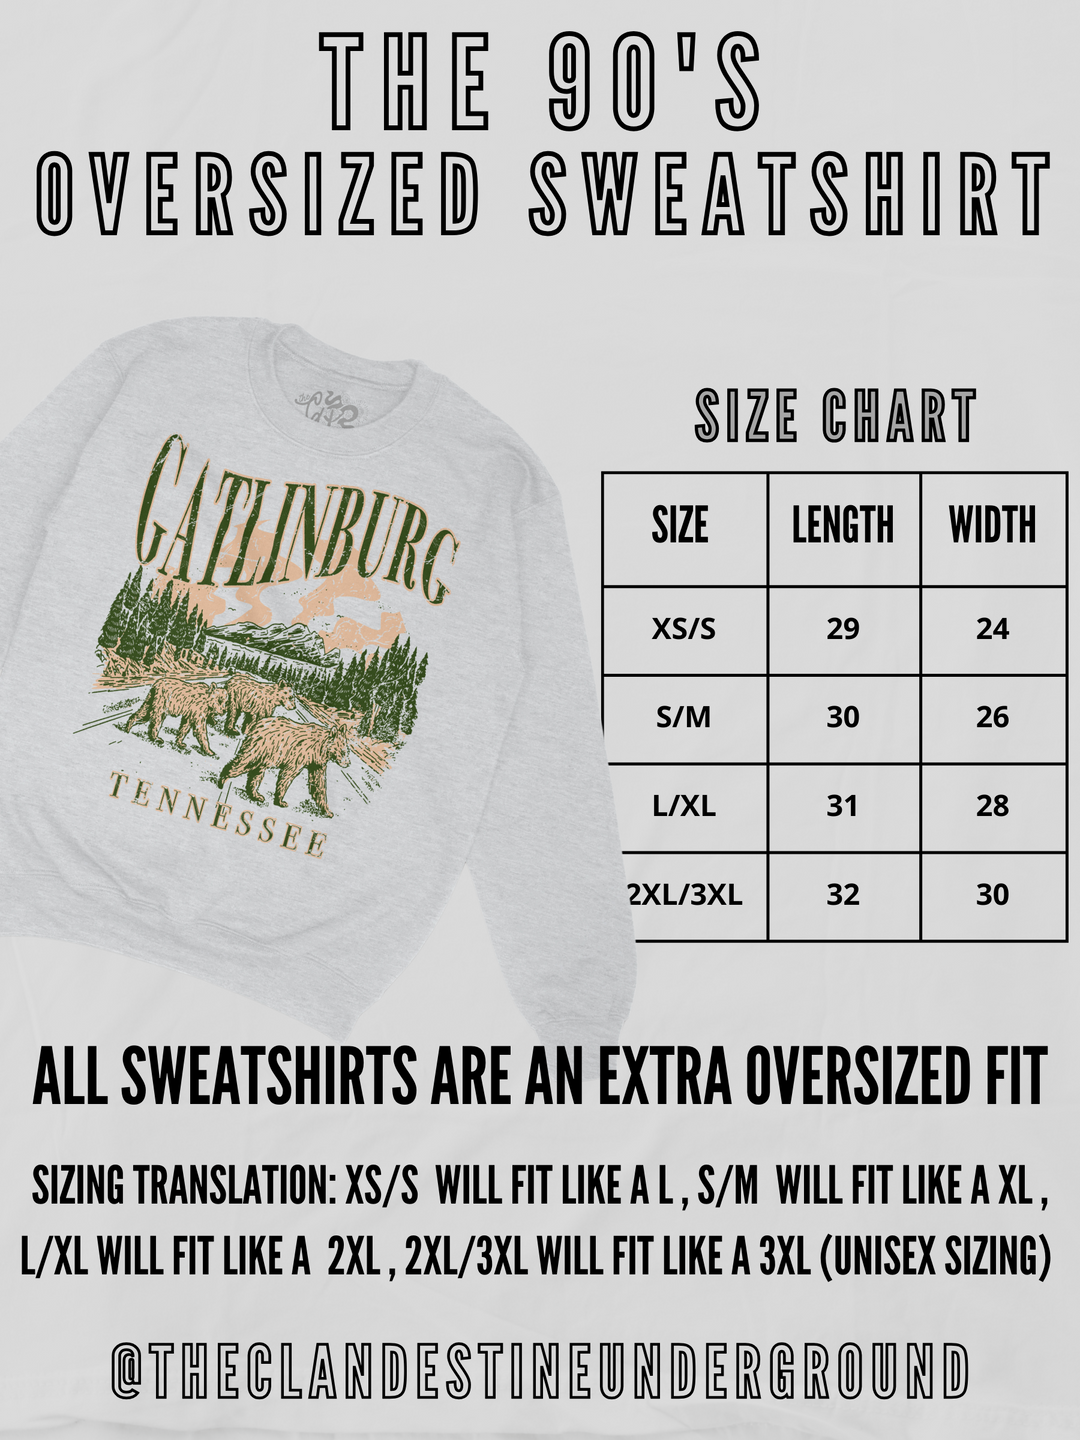 Underground Original Design: San Francisco Football Oversized 90s Sweatshirt